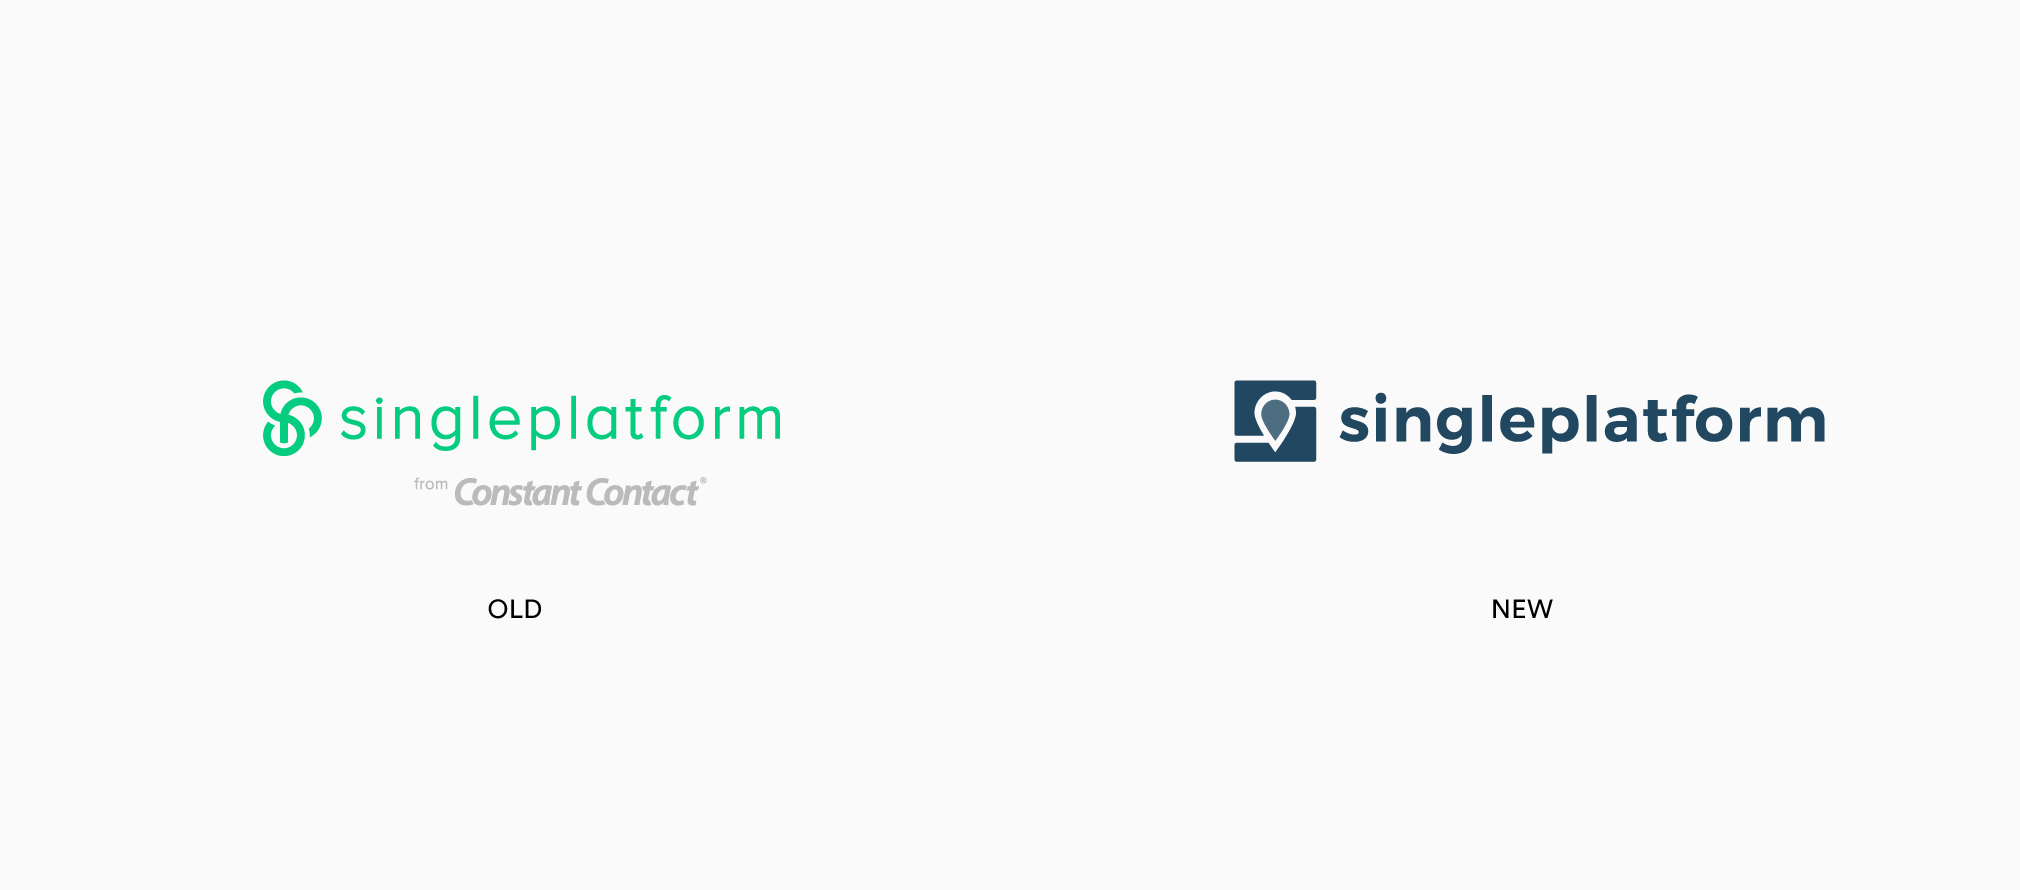 singleplatform rebrand